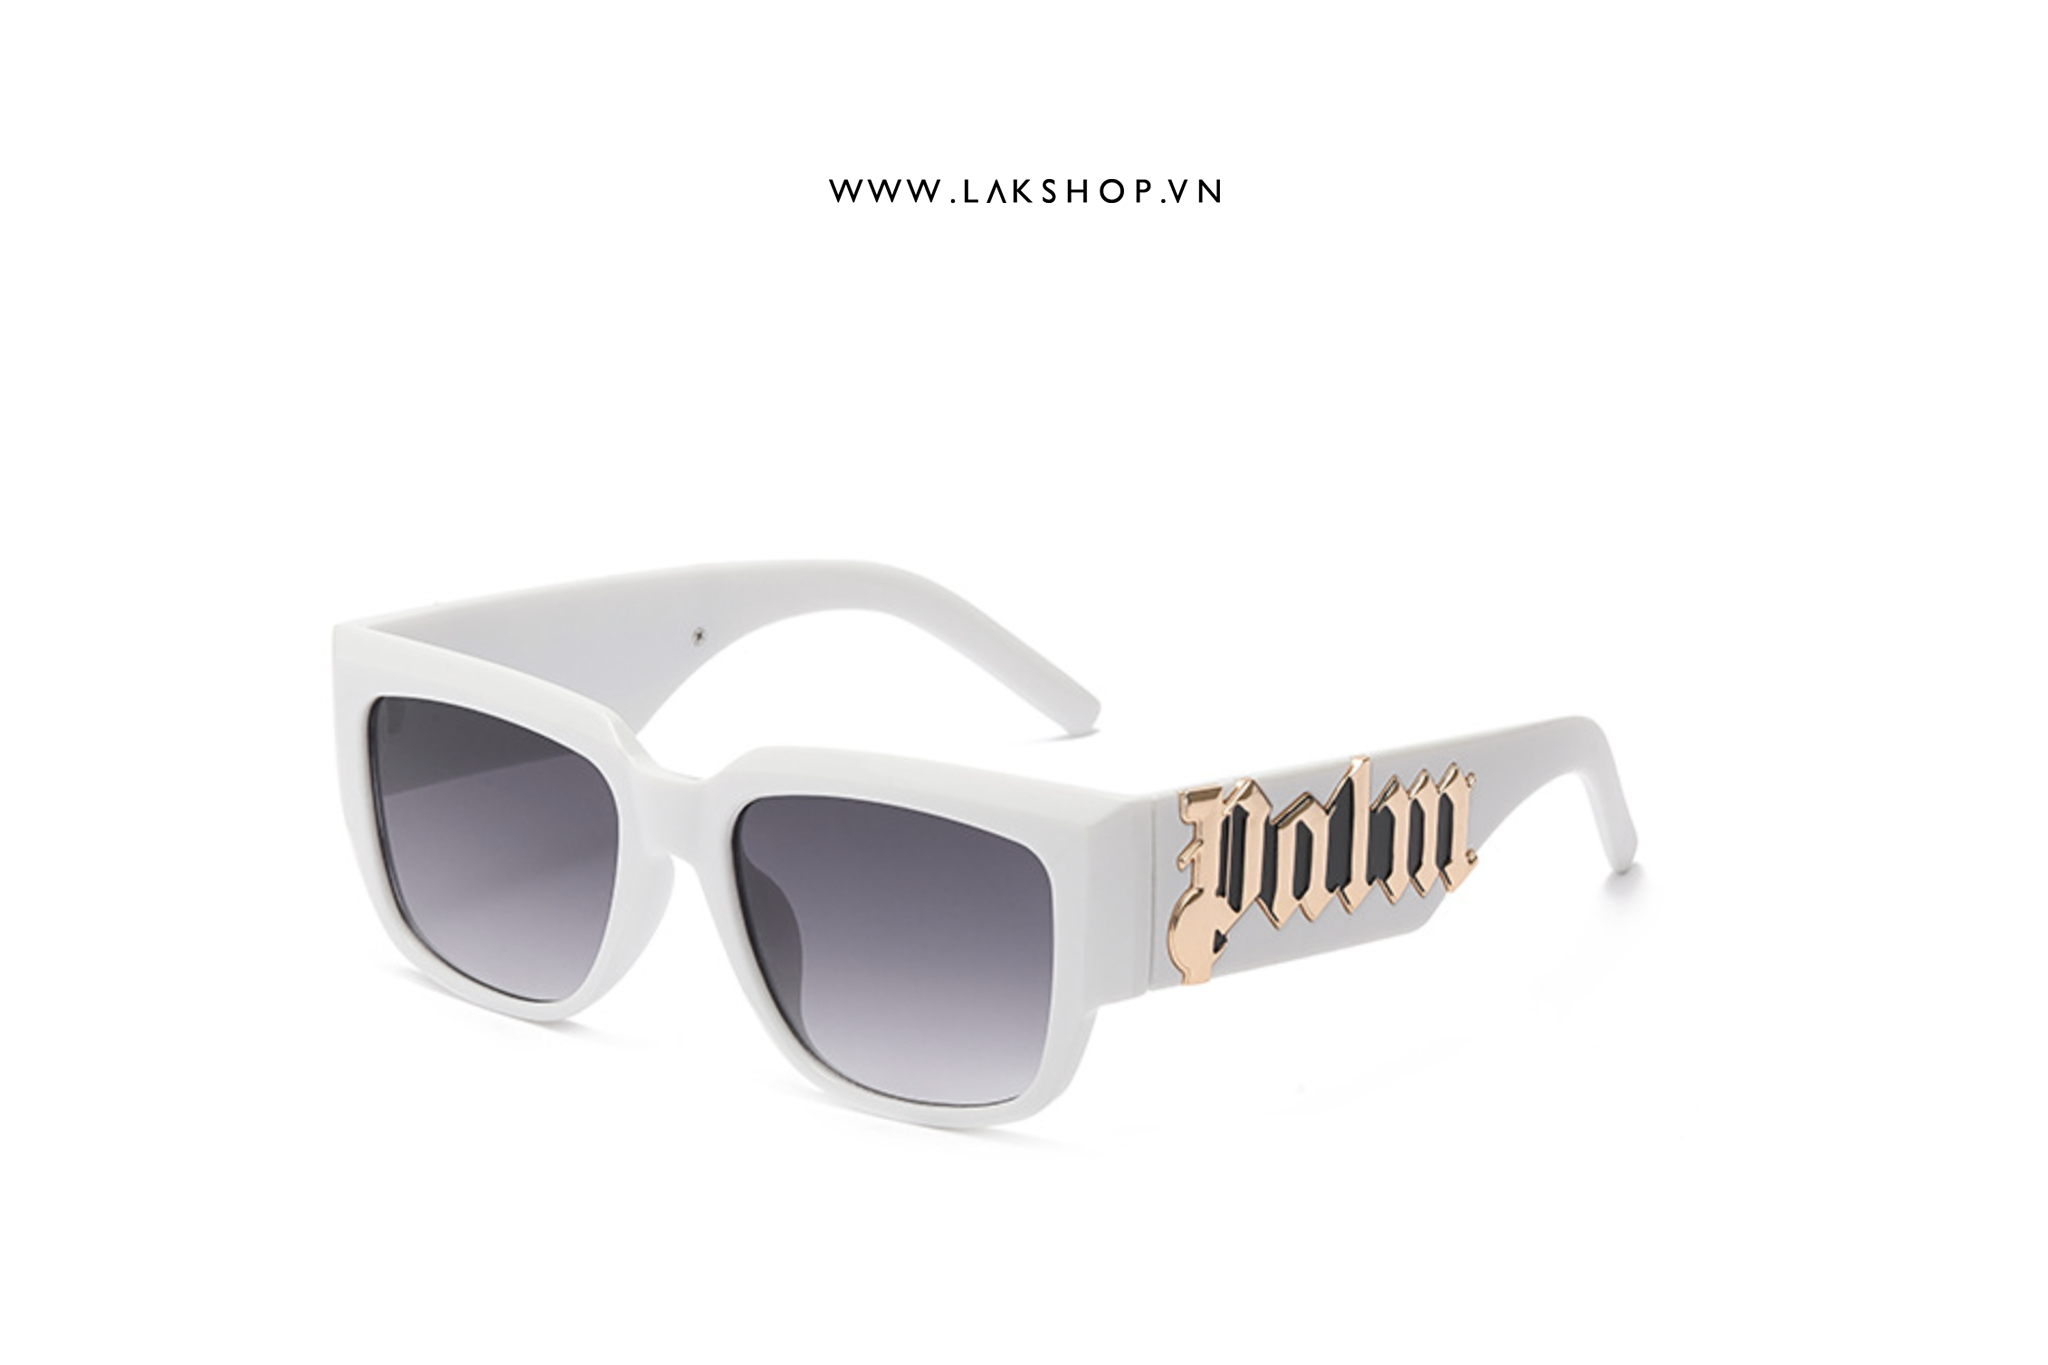 PaIm AngeIs Laguna Square-Frame Sunglasses in White